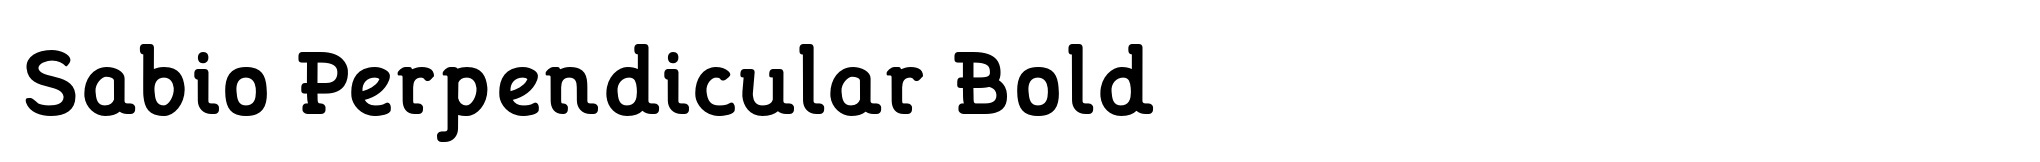 Sabio Perpendicular Bold image